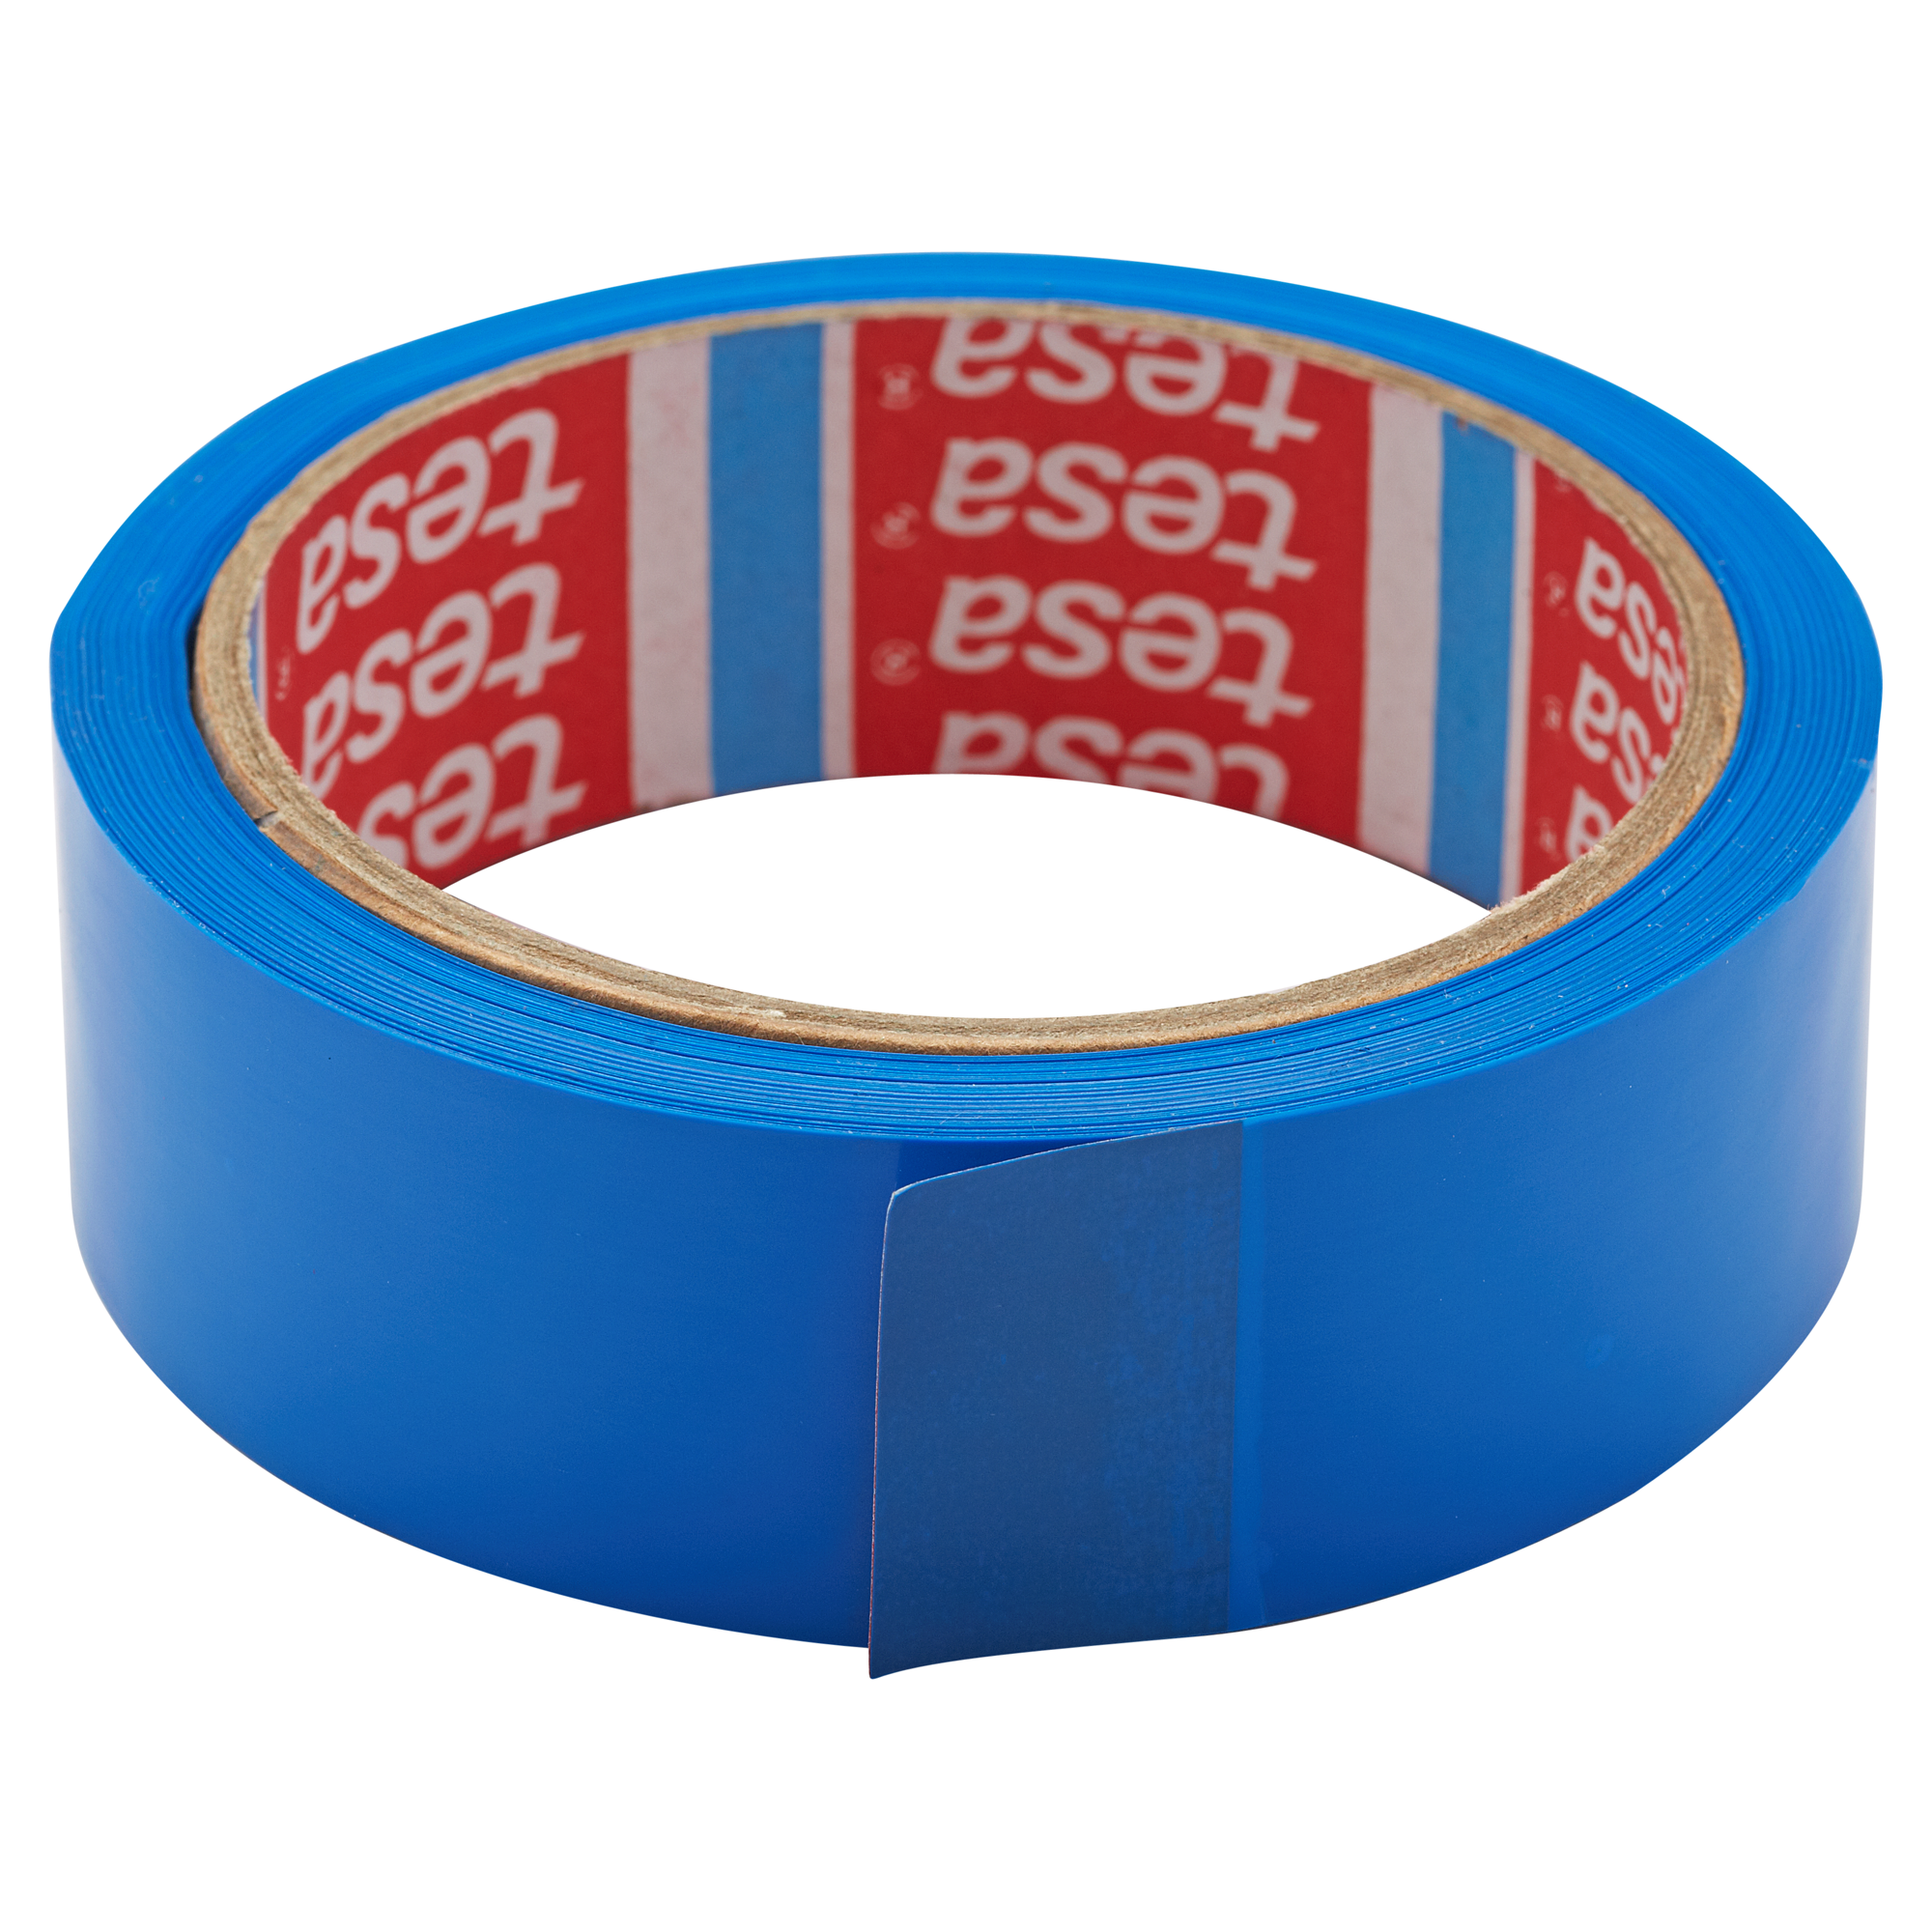 Tesa Malerband für Lacke 25 m blau + product picture